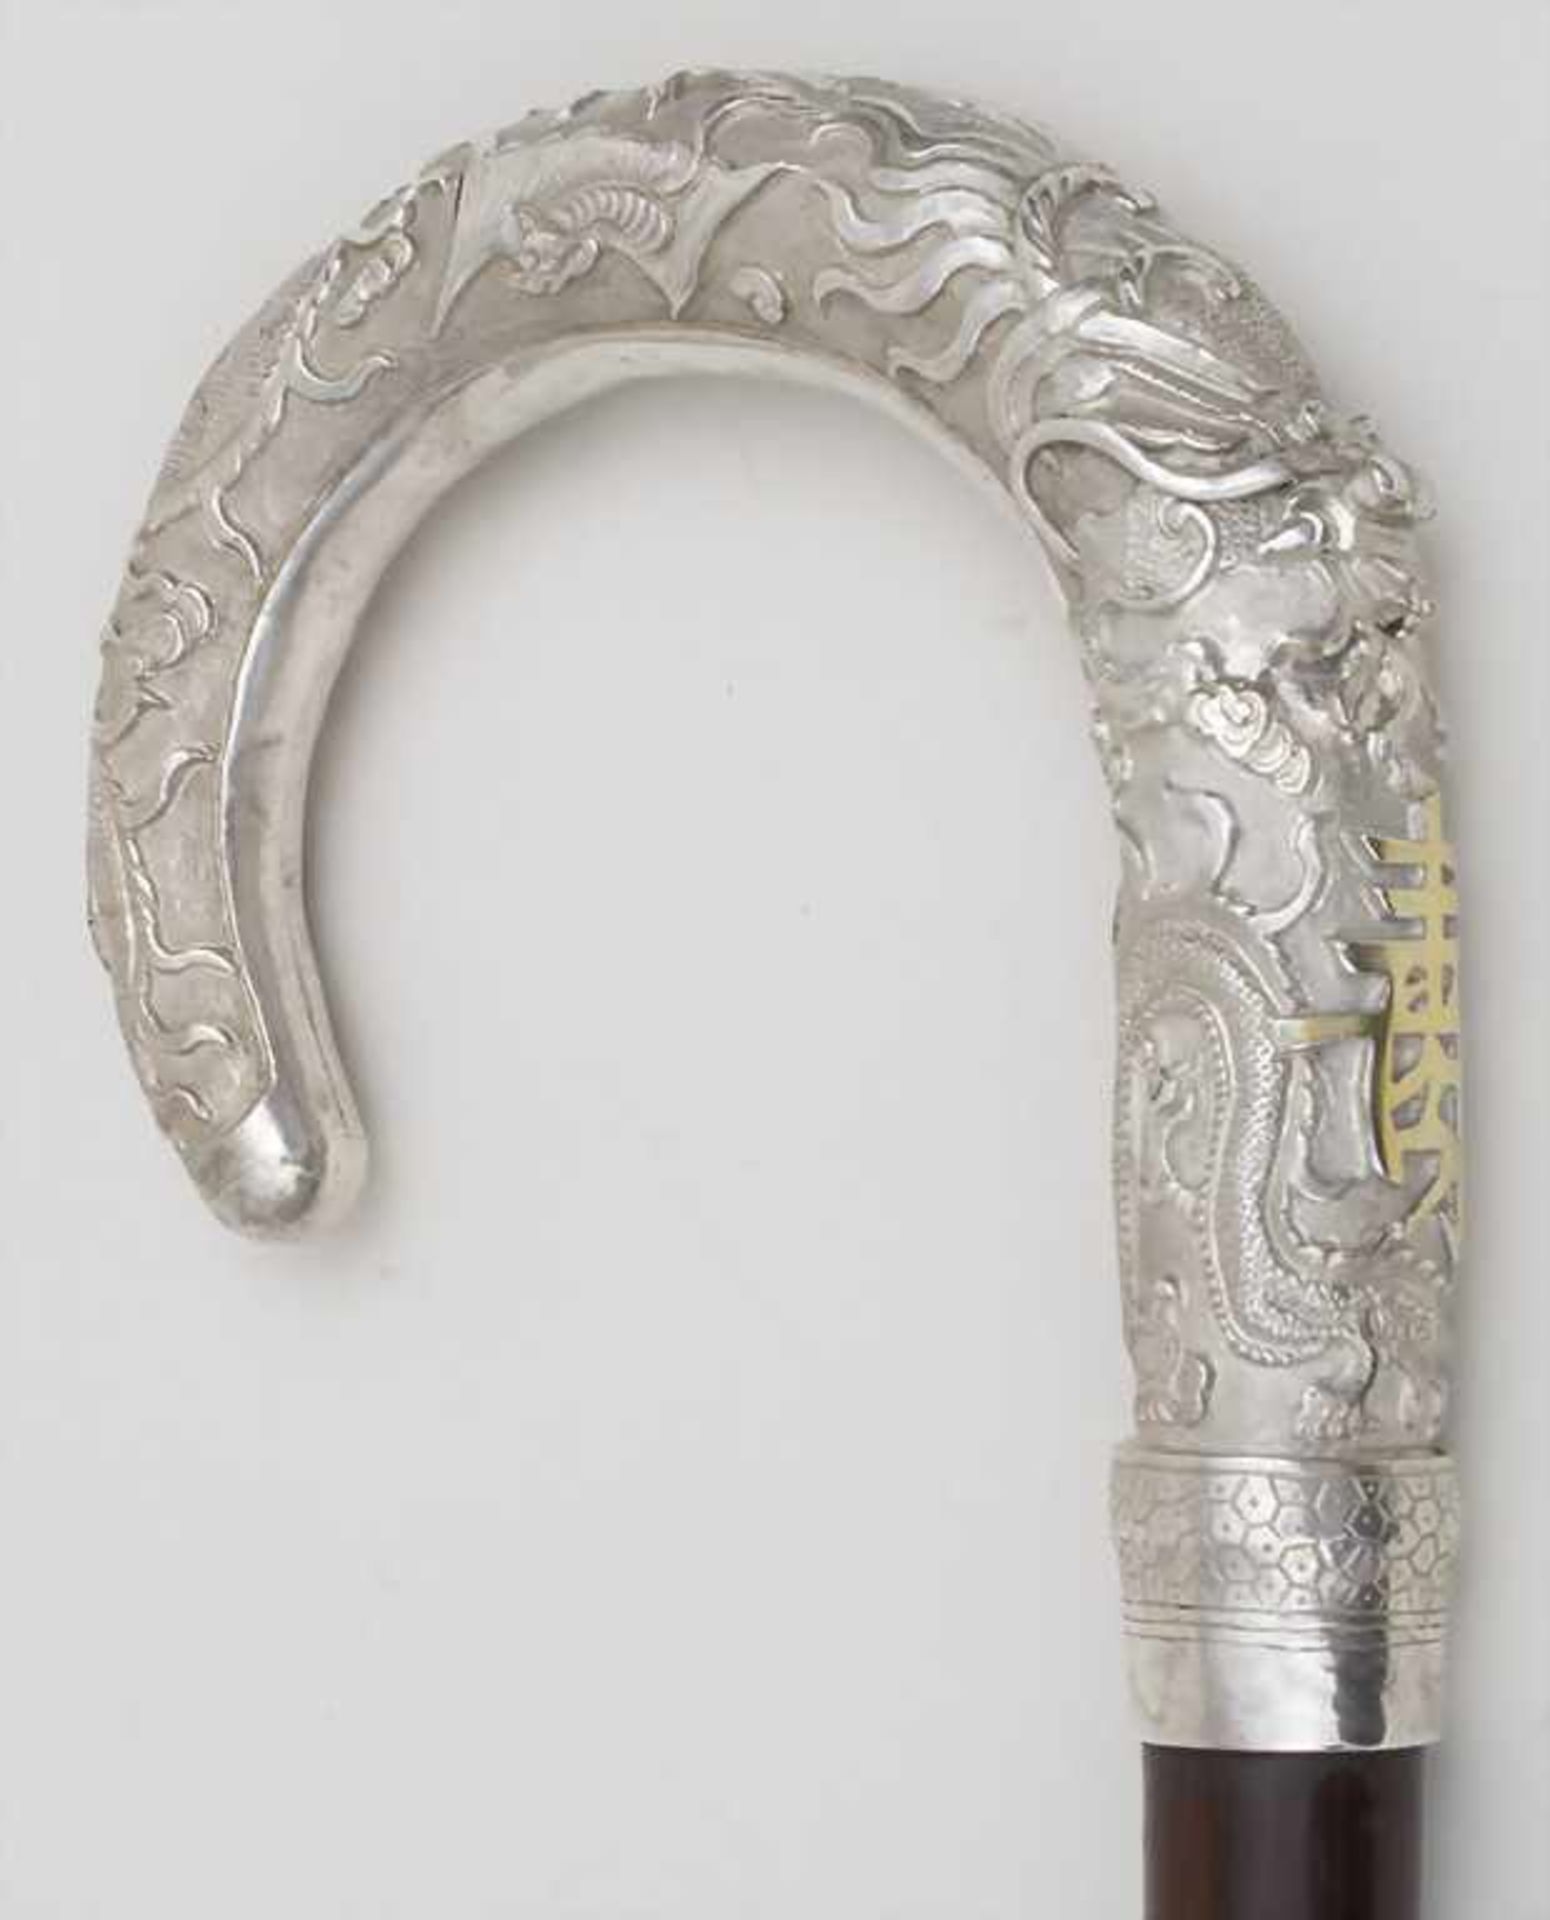 Gehstock mit Drachenmotiv / A cane with dragon handle, China (Hong Kong), um 1900Material: Silber - Bild 5 aus 7